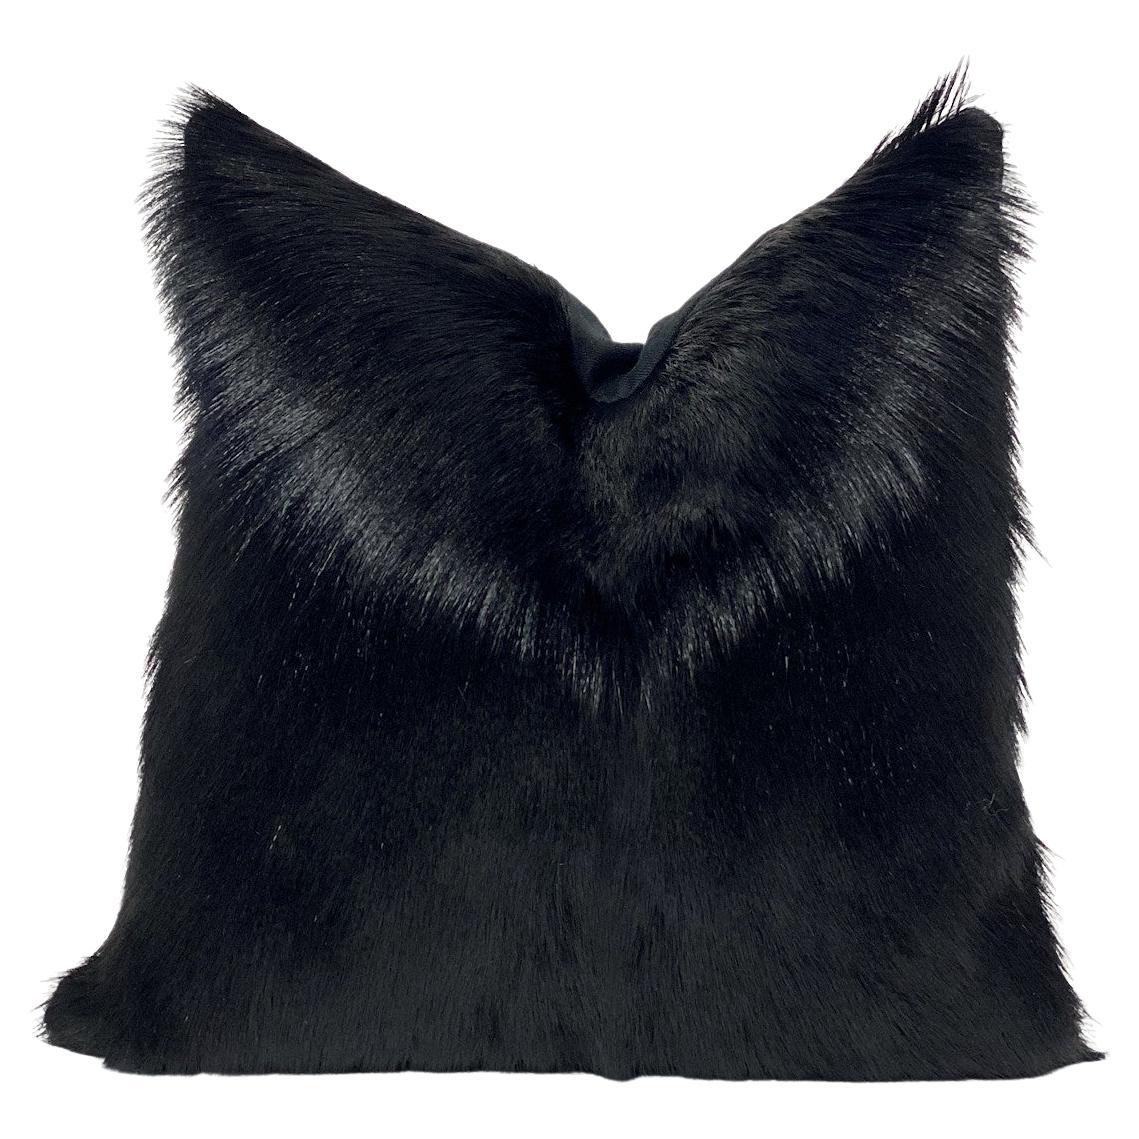 Black Fur Pillow, Goat Hair 18x18"  45x45cm